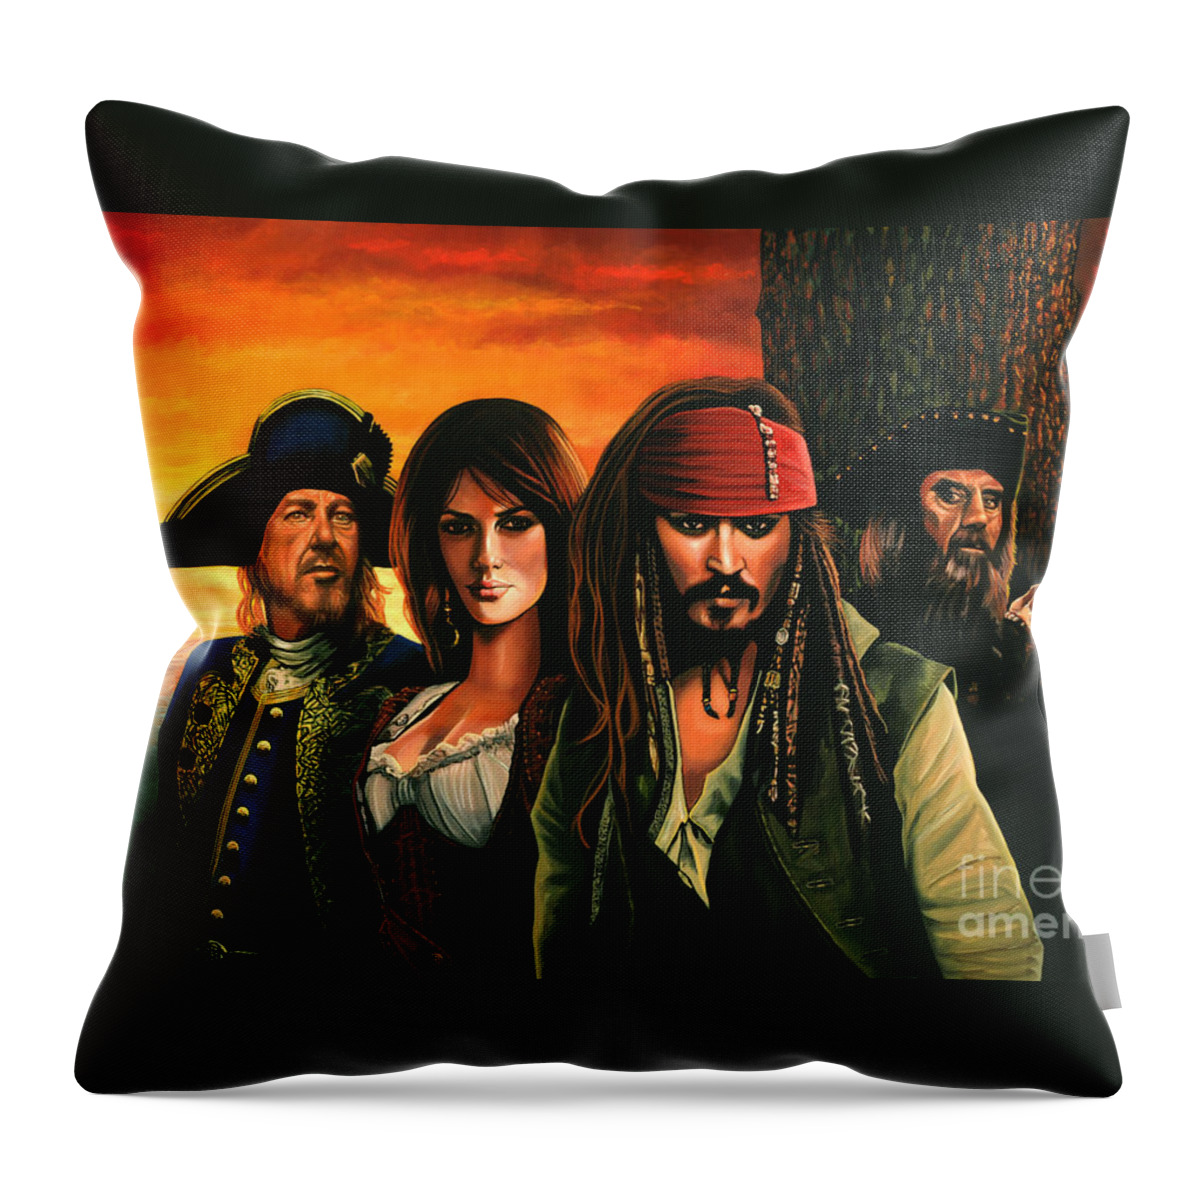 Pirates Of The Caribbean Throw Pillow featuring the painting Pirates of the Caribbean by Paul Meijering